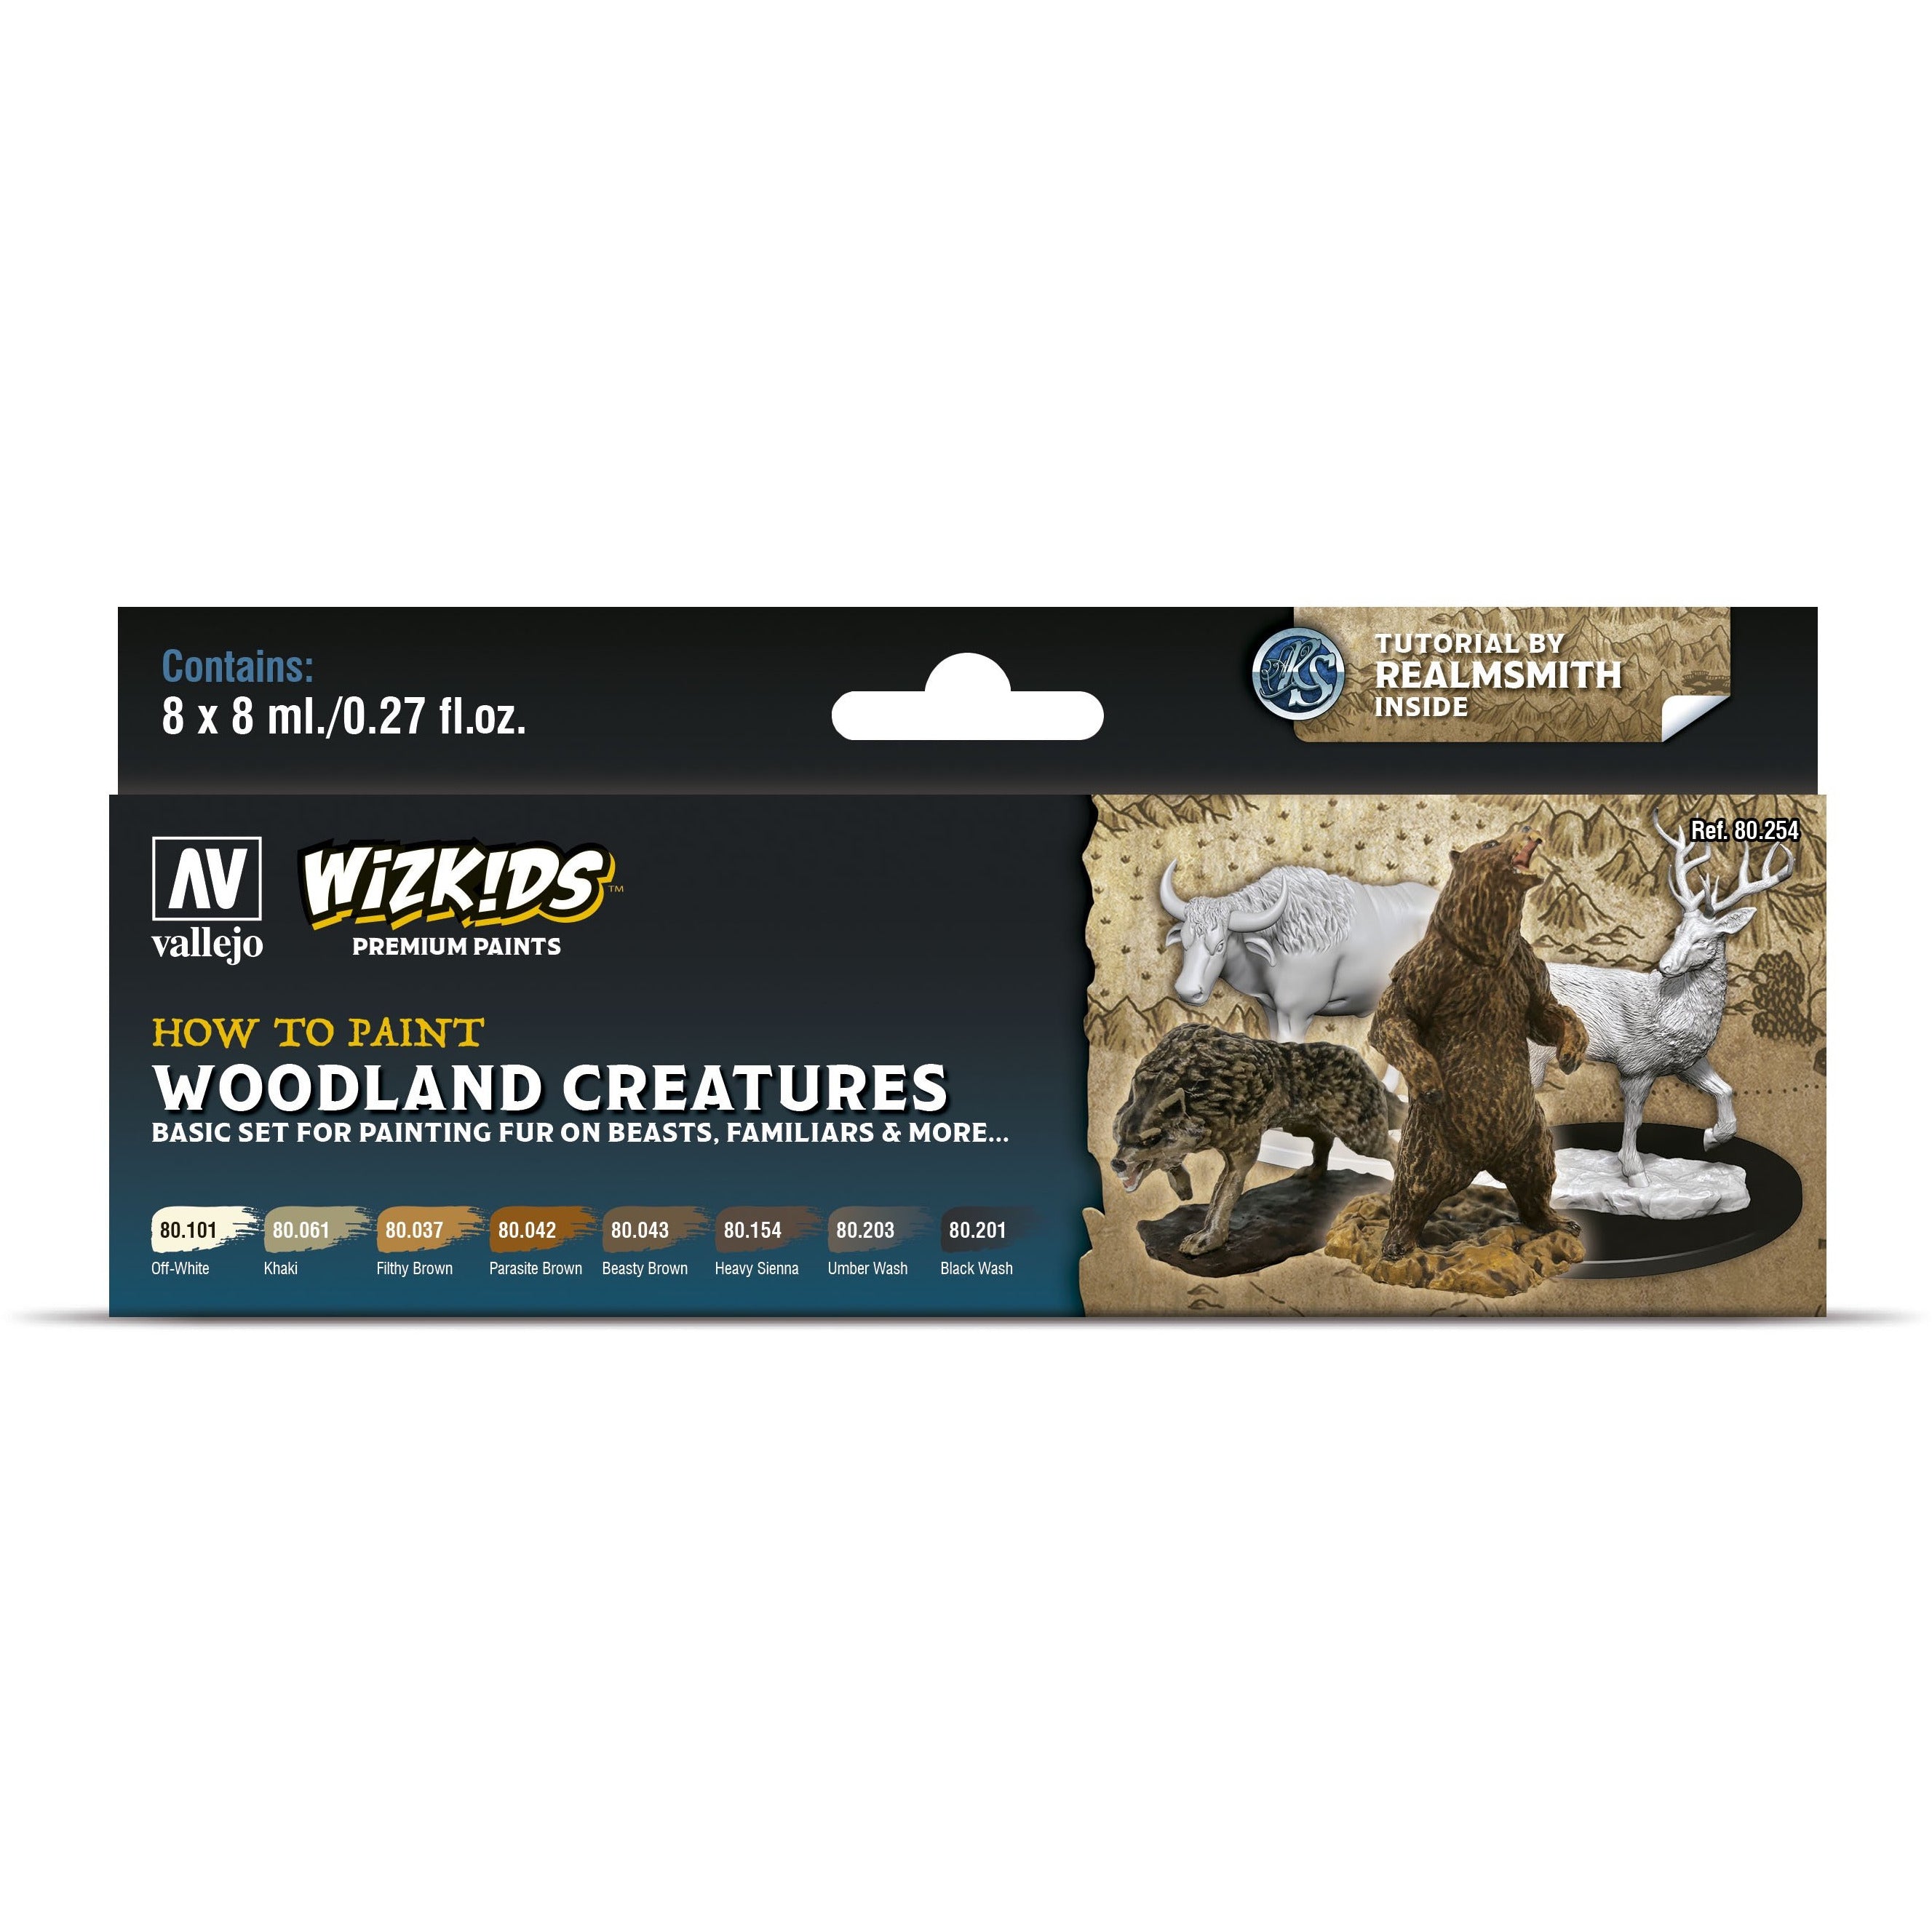 WIZK!DS Premium Paint Set Woodland Creatures